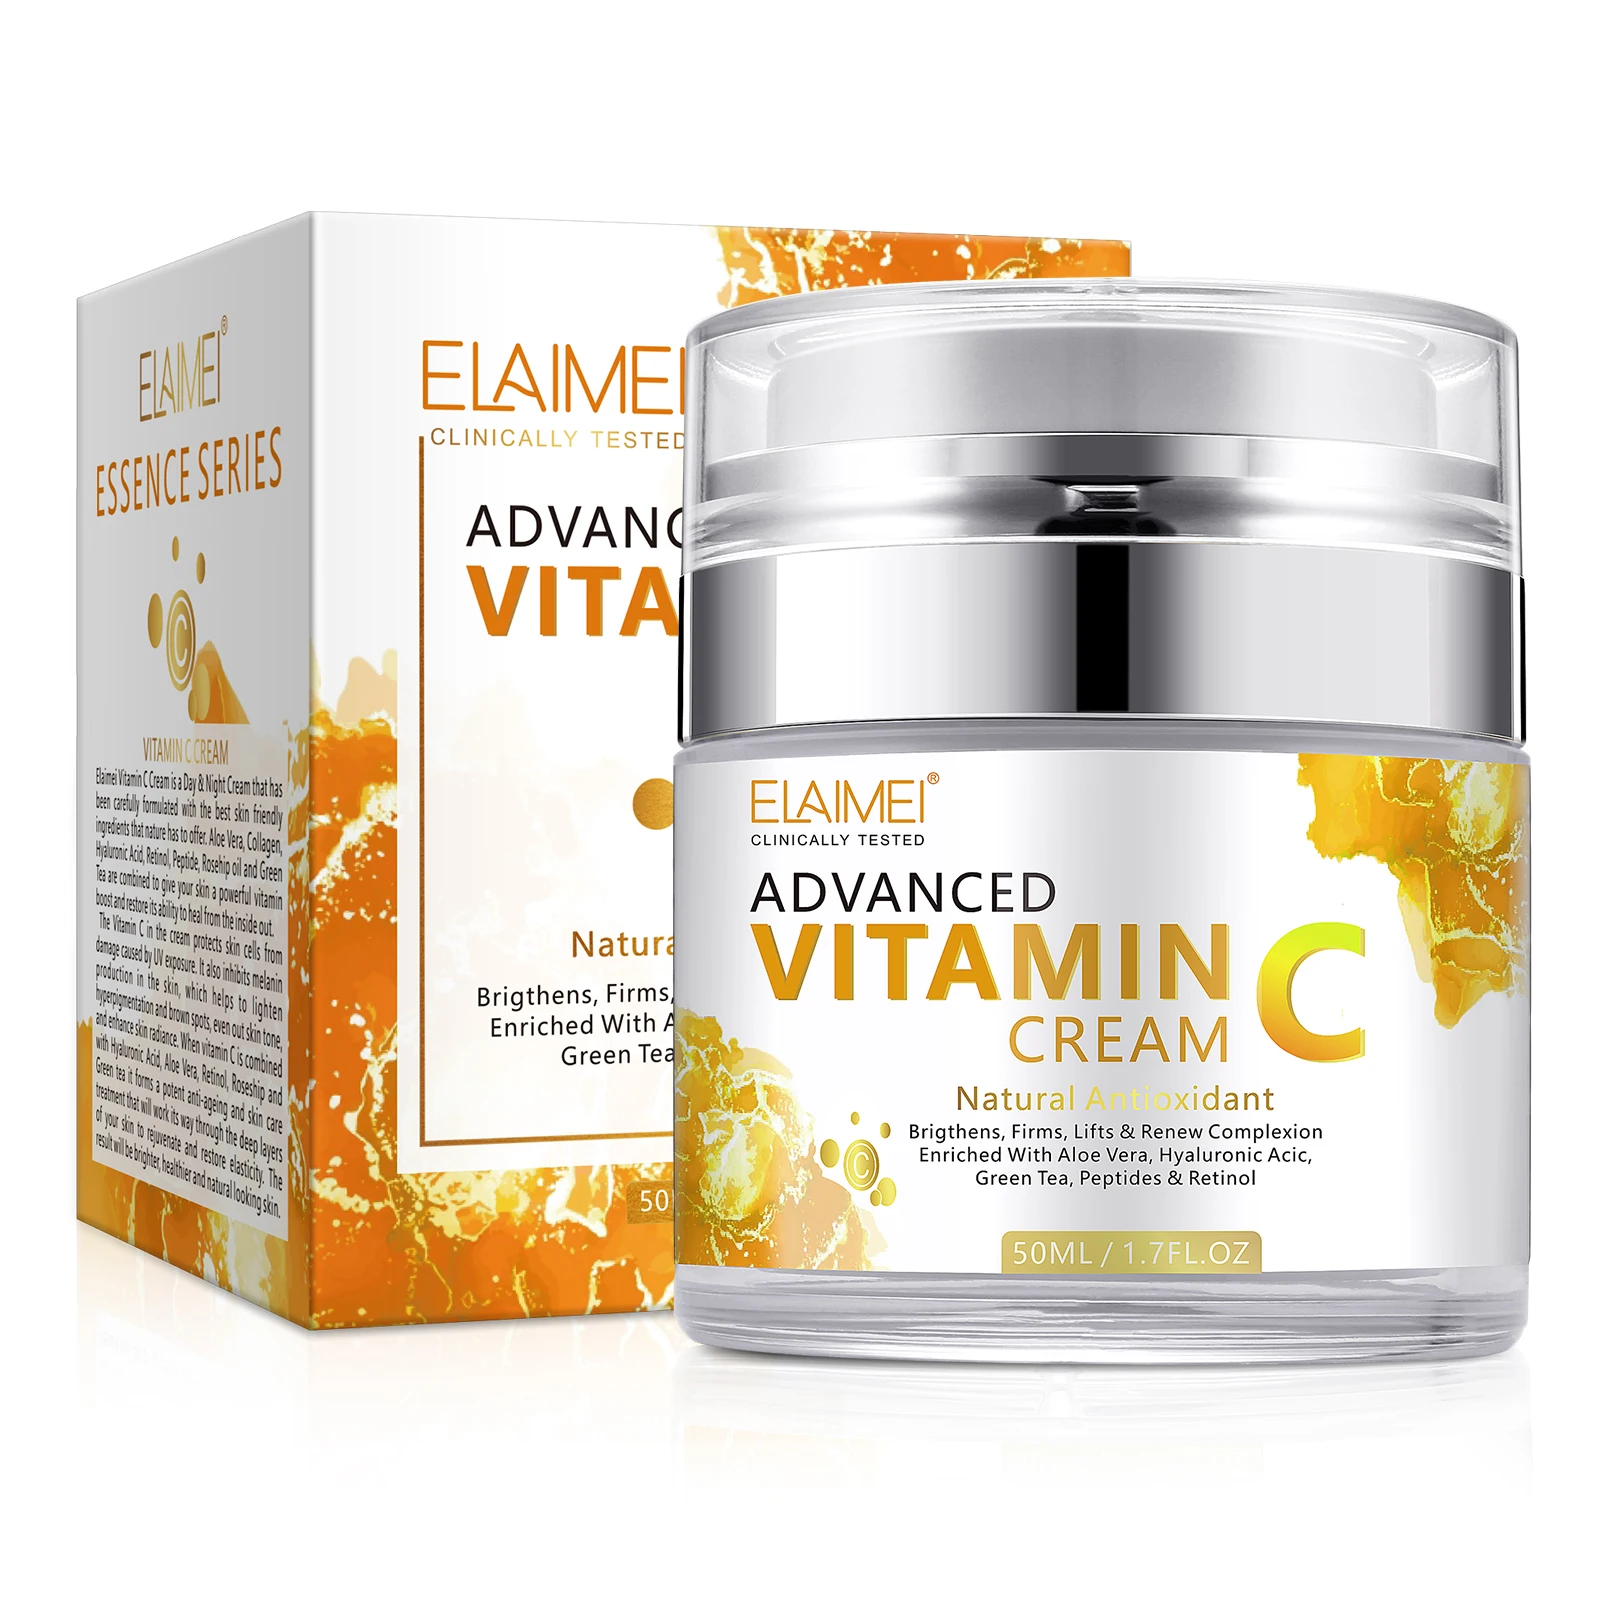 

ELAIMEI Hot Sale Hyaluronic Acid VC Facial Cream Moisturizing Anti-Wrinkle Anti-Aging Firming Vitamin C Whitening Face Cream